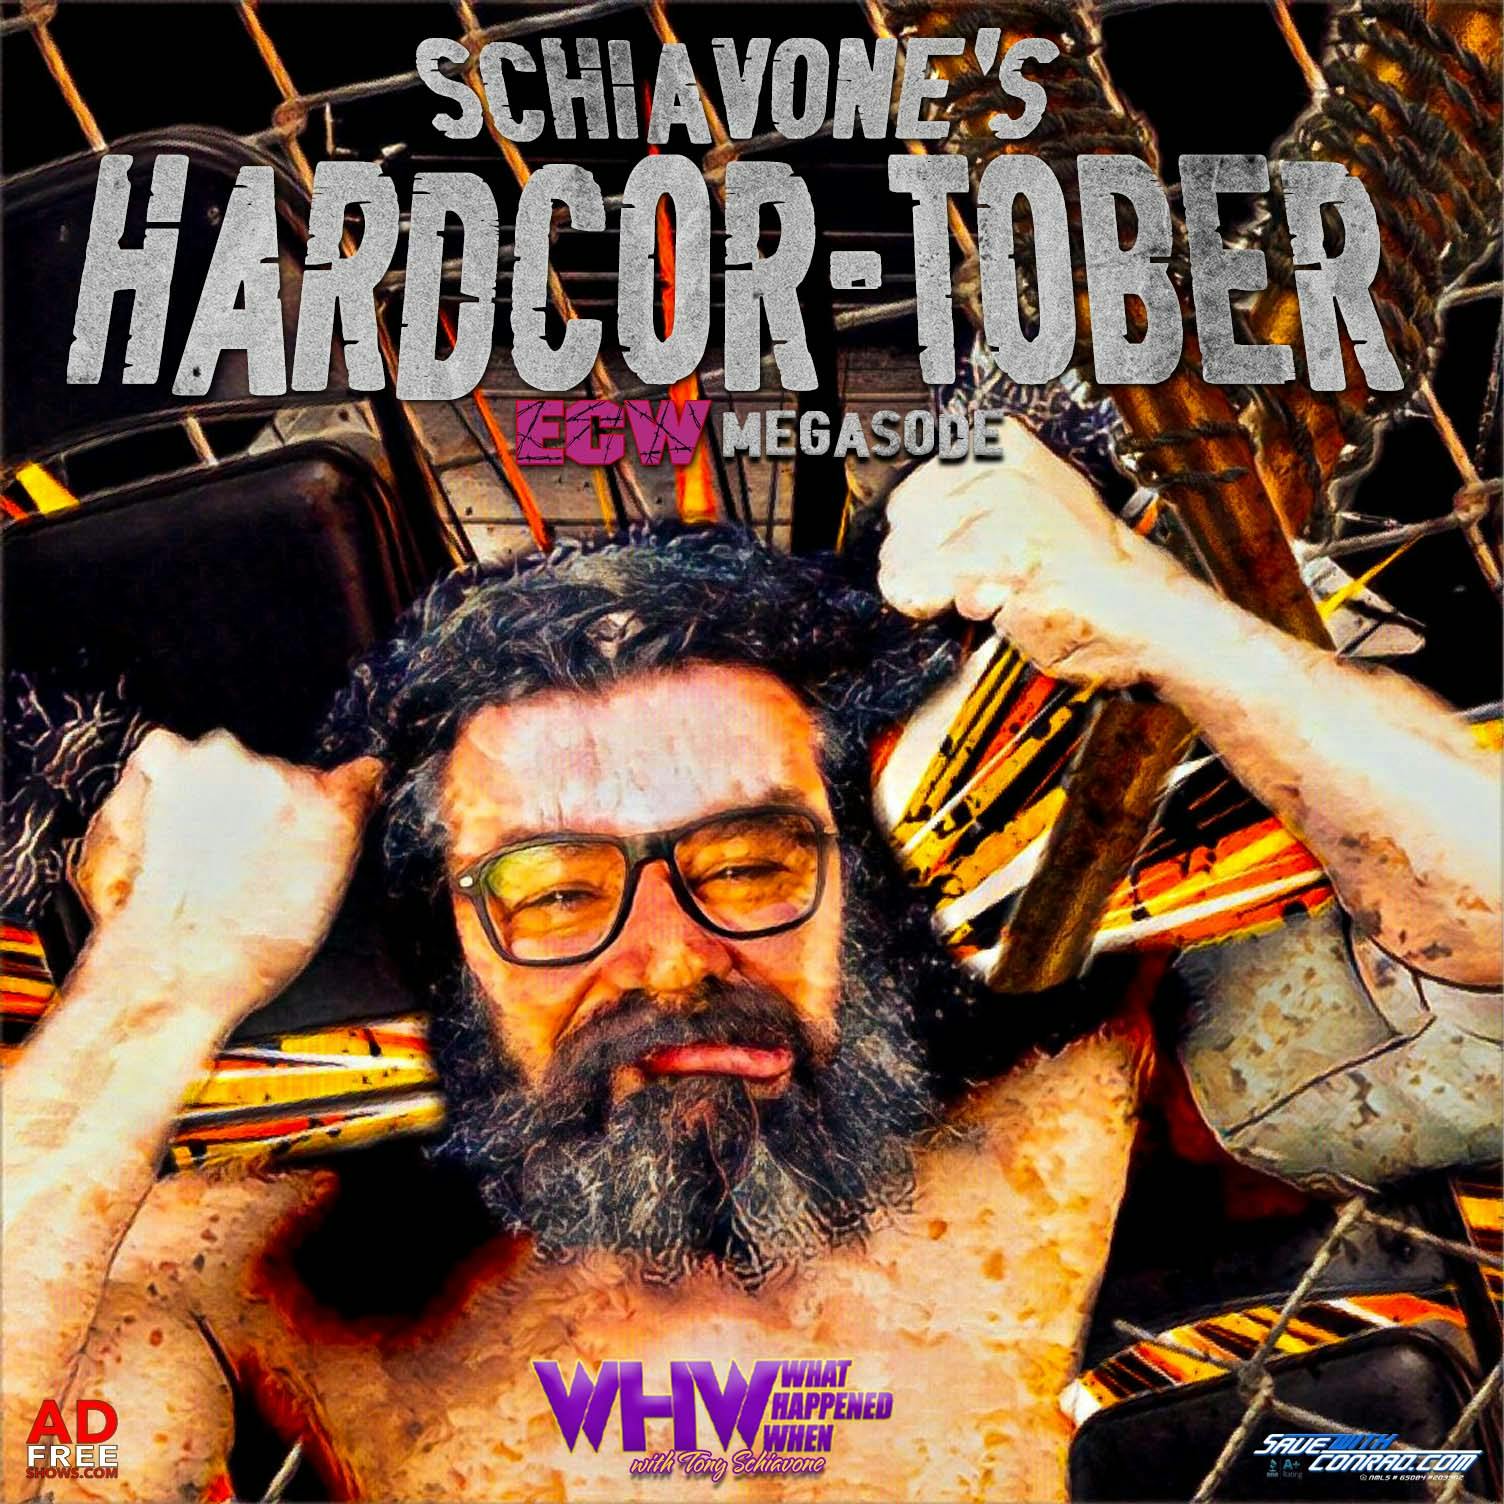 Episode 301: Schiavone's Hardcor-tober! ECW Megasode